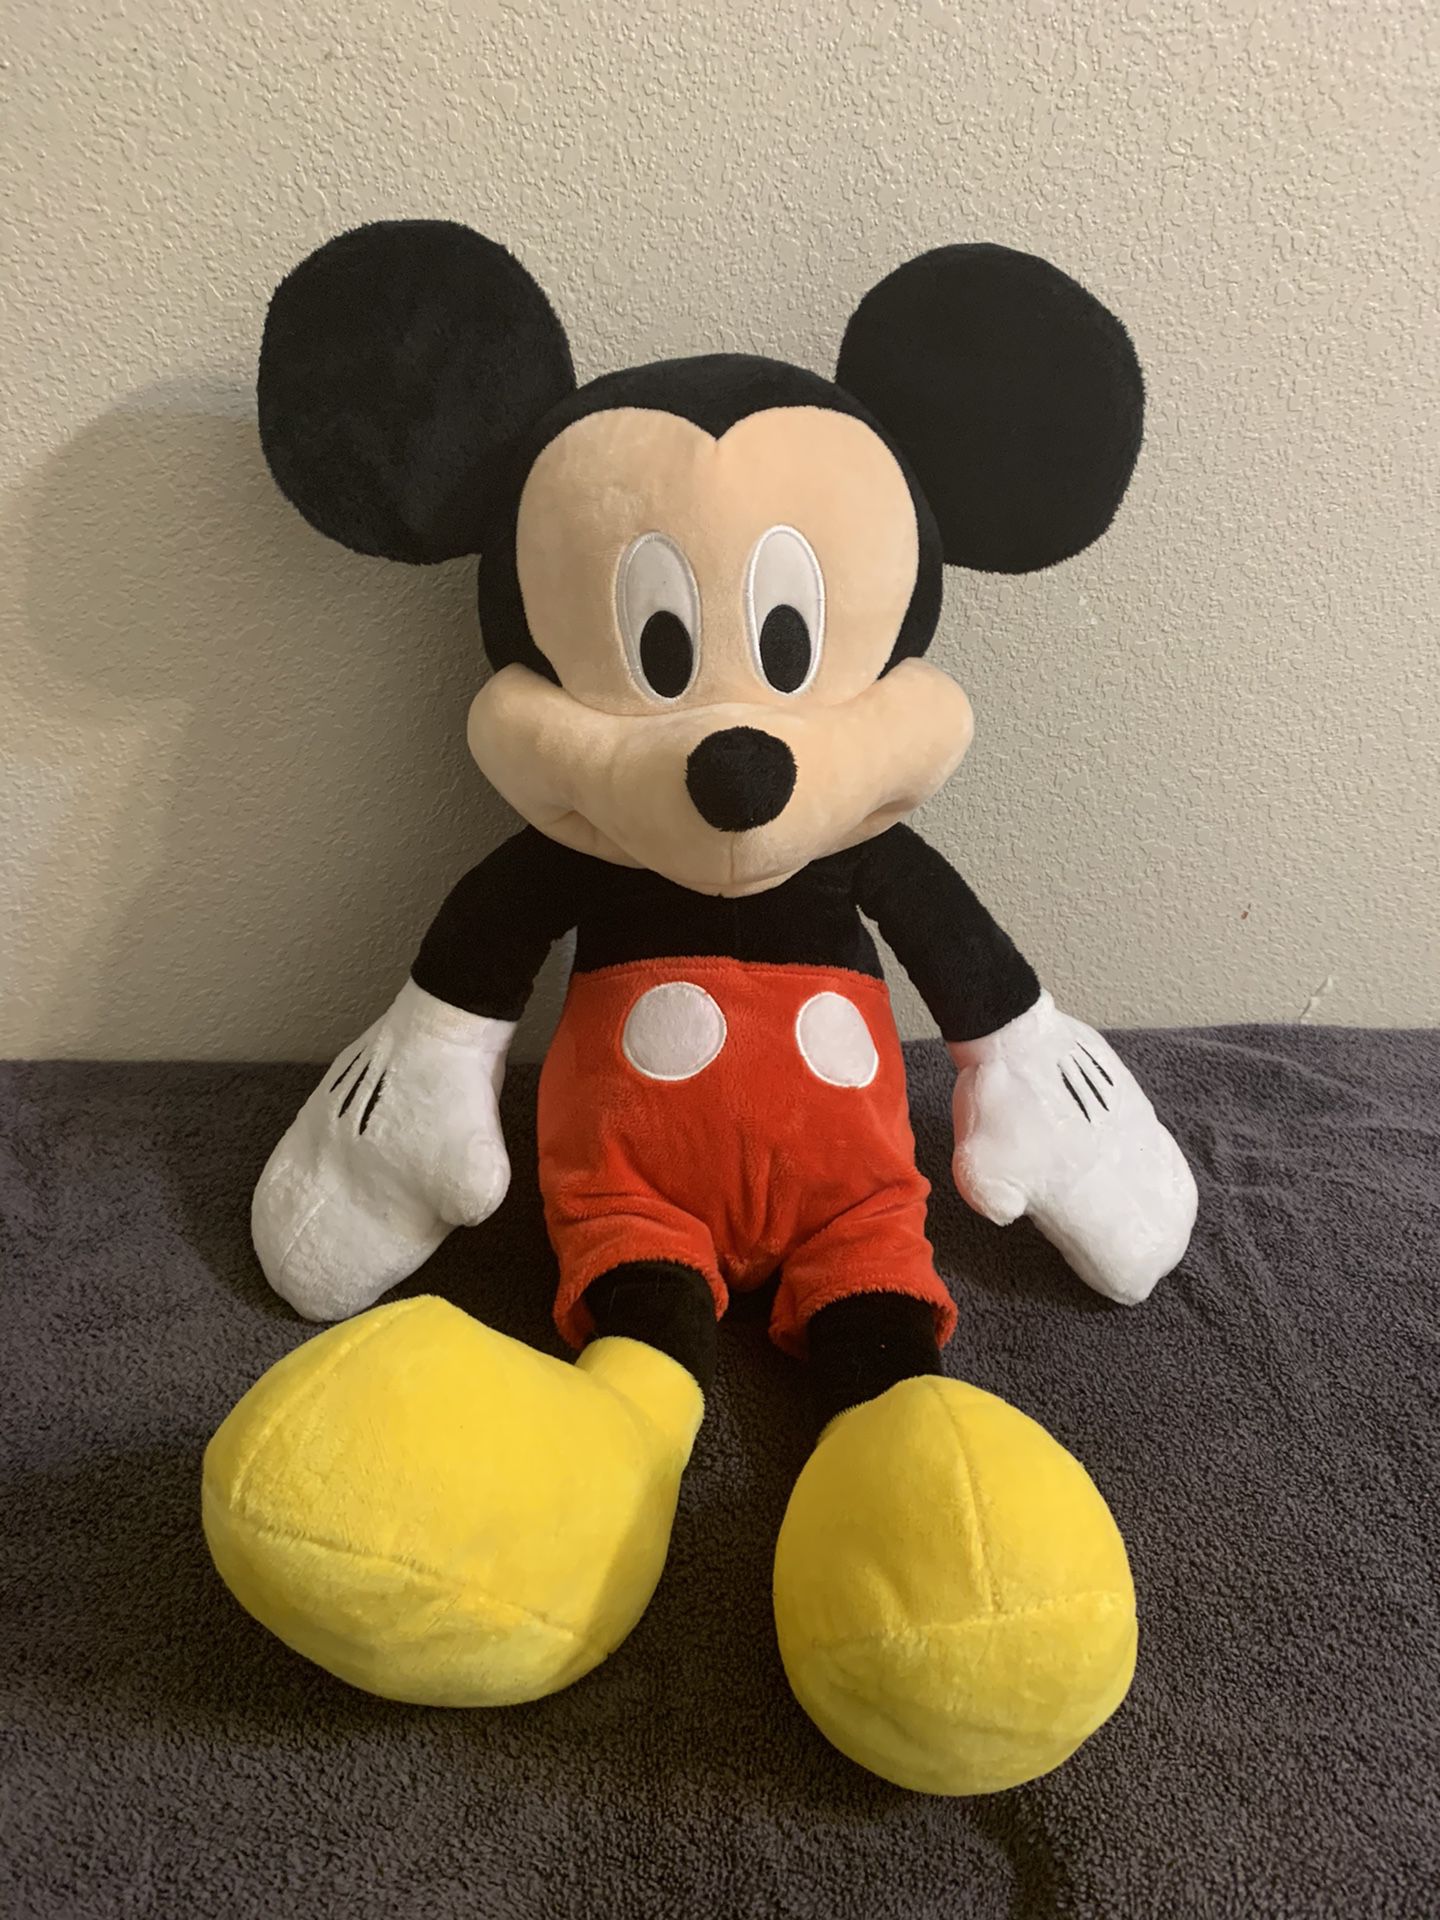 Disney Mickey Mouse plush